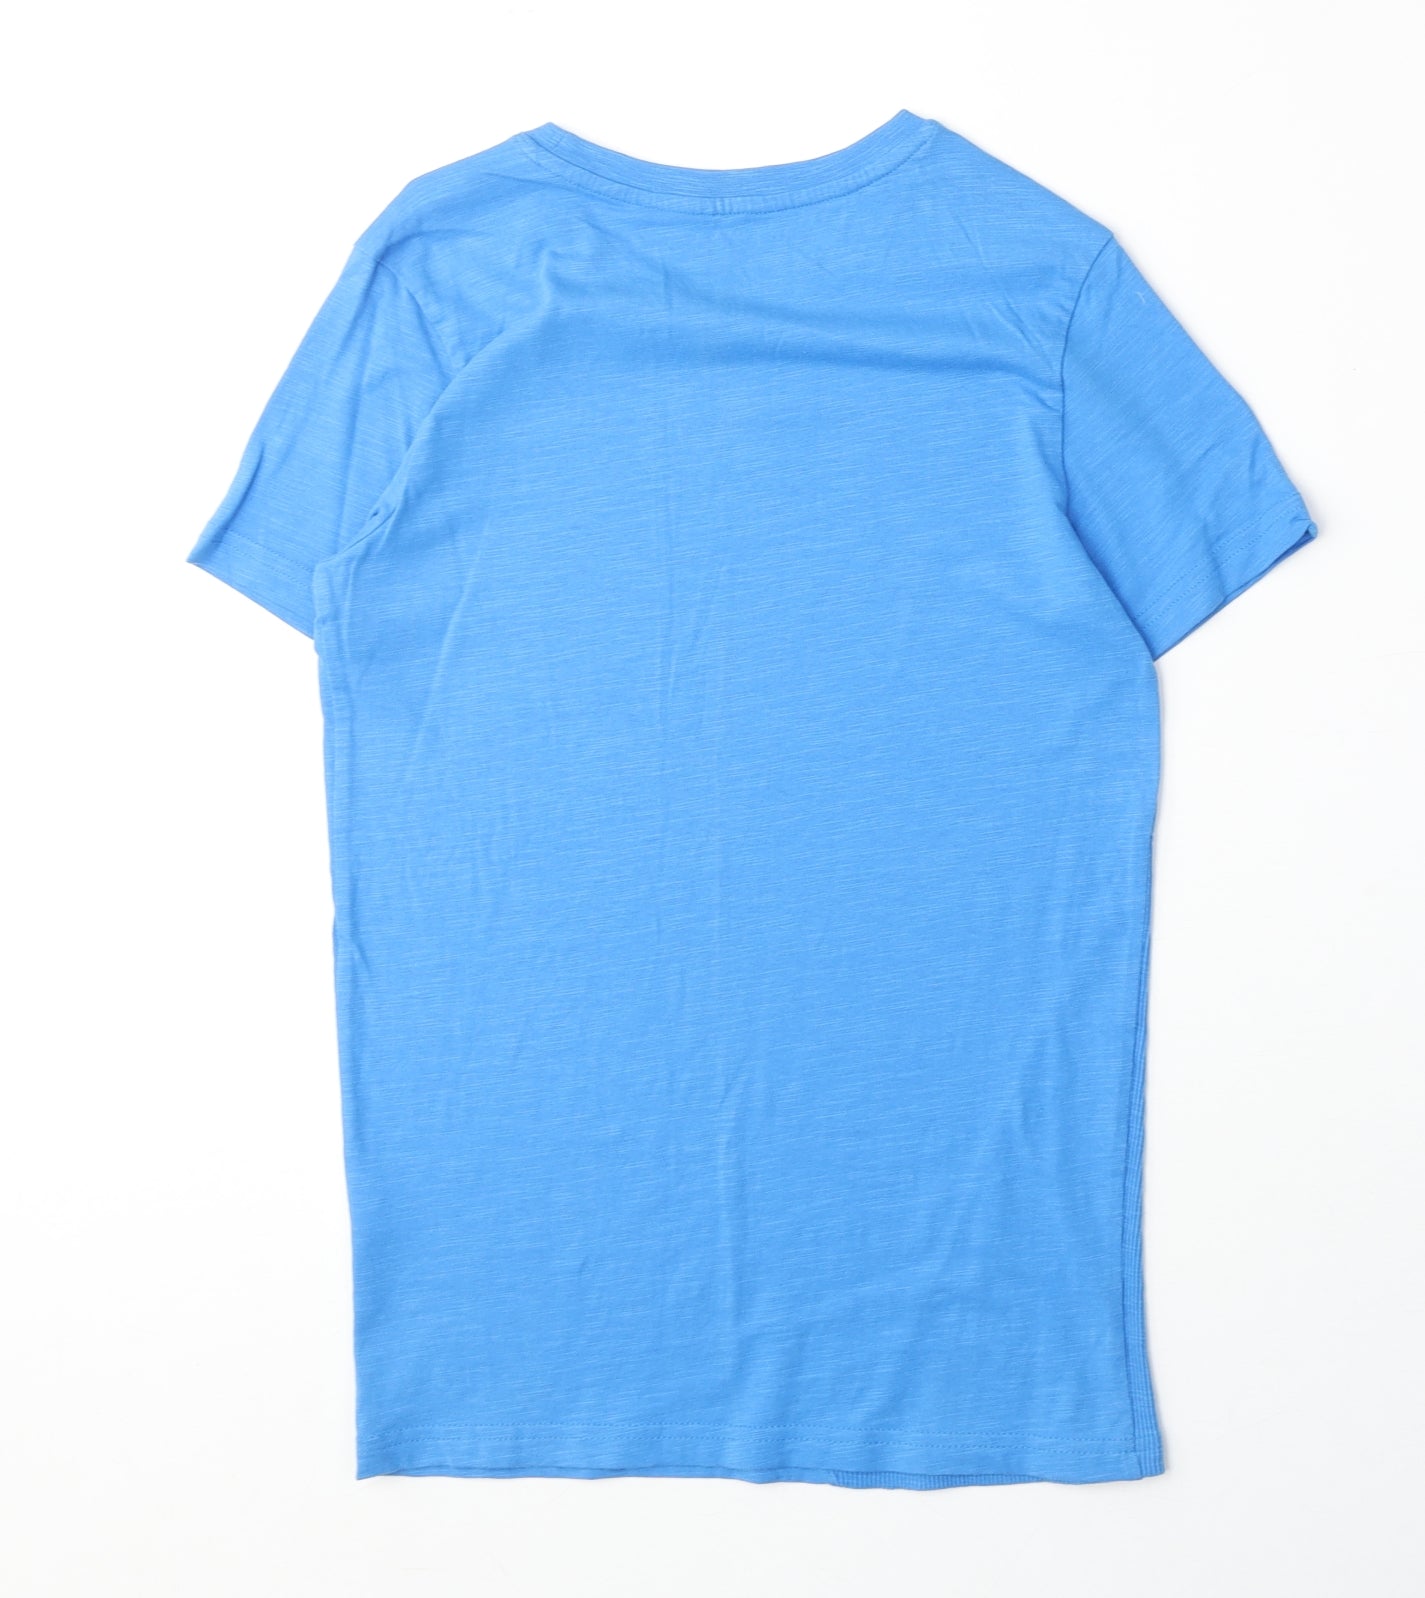 Nutmeg Boys Blue Cotton Basic T-Shirt Size 10-11 Years Round Neck Pullover